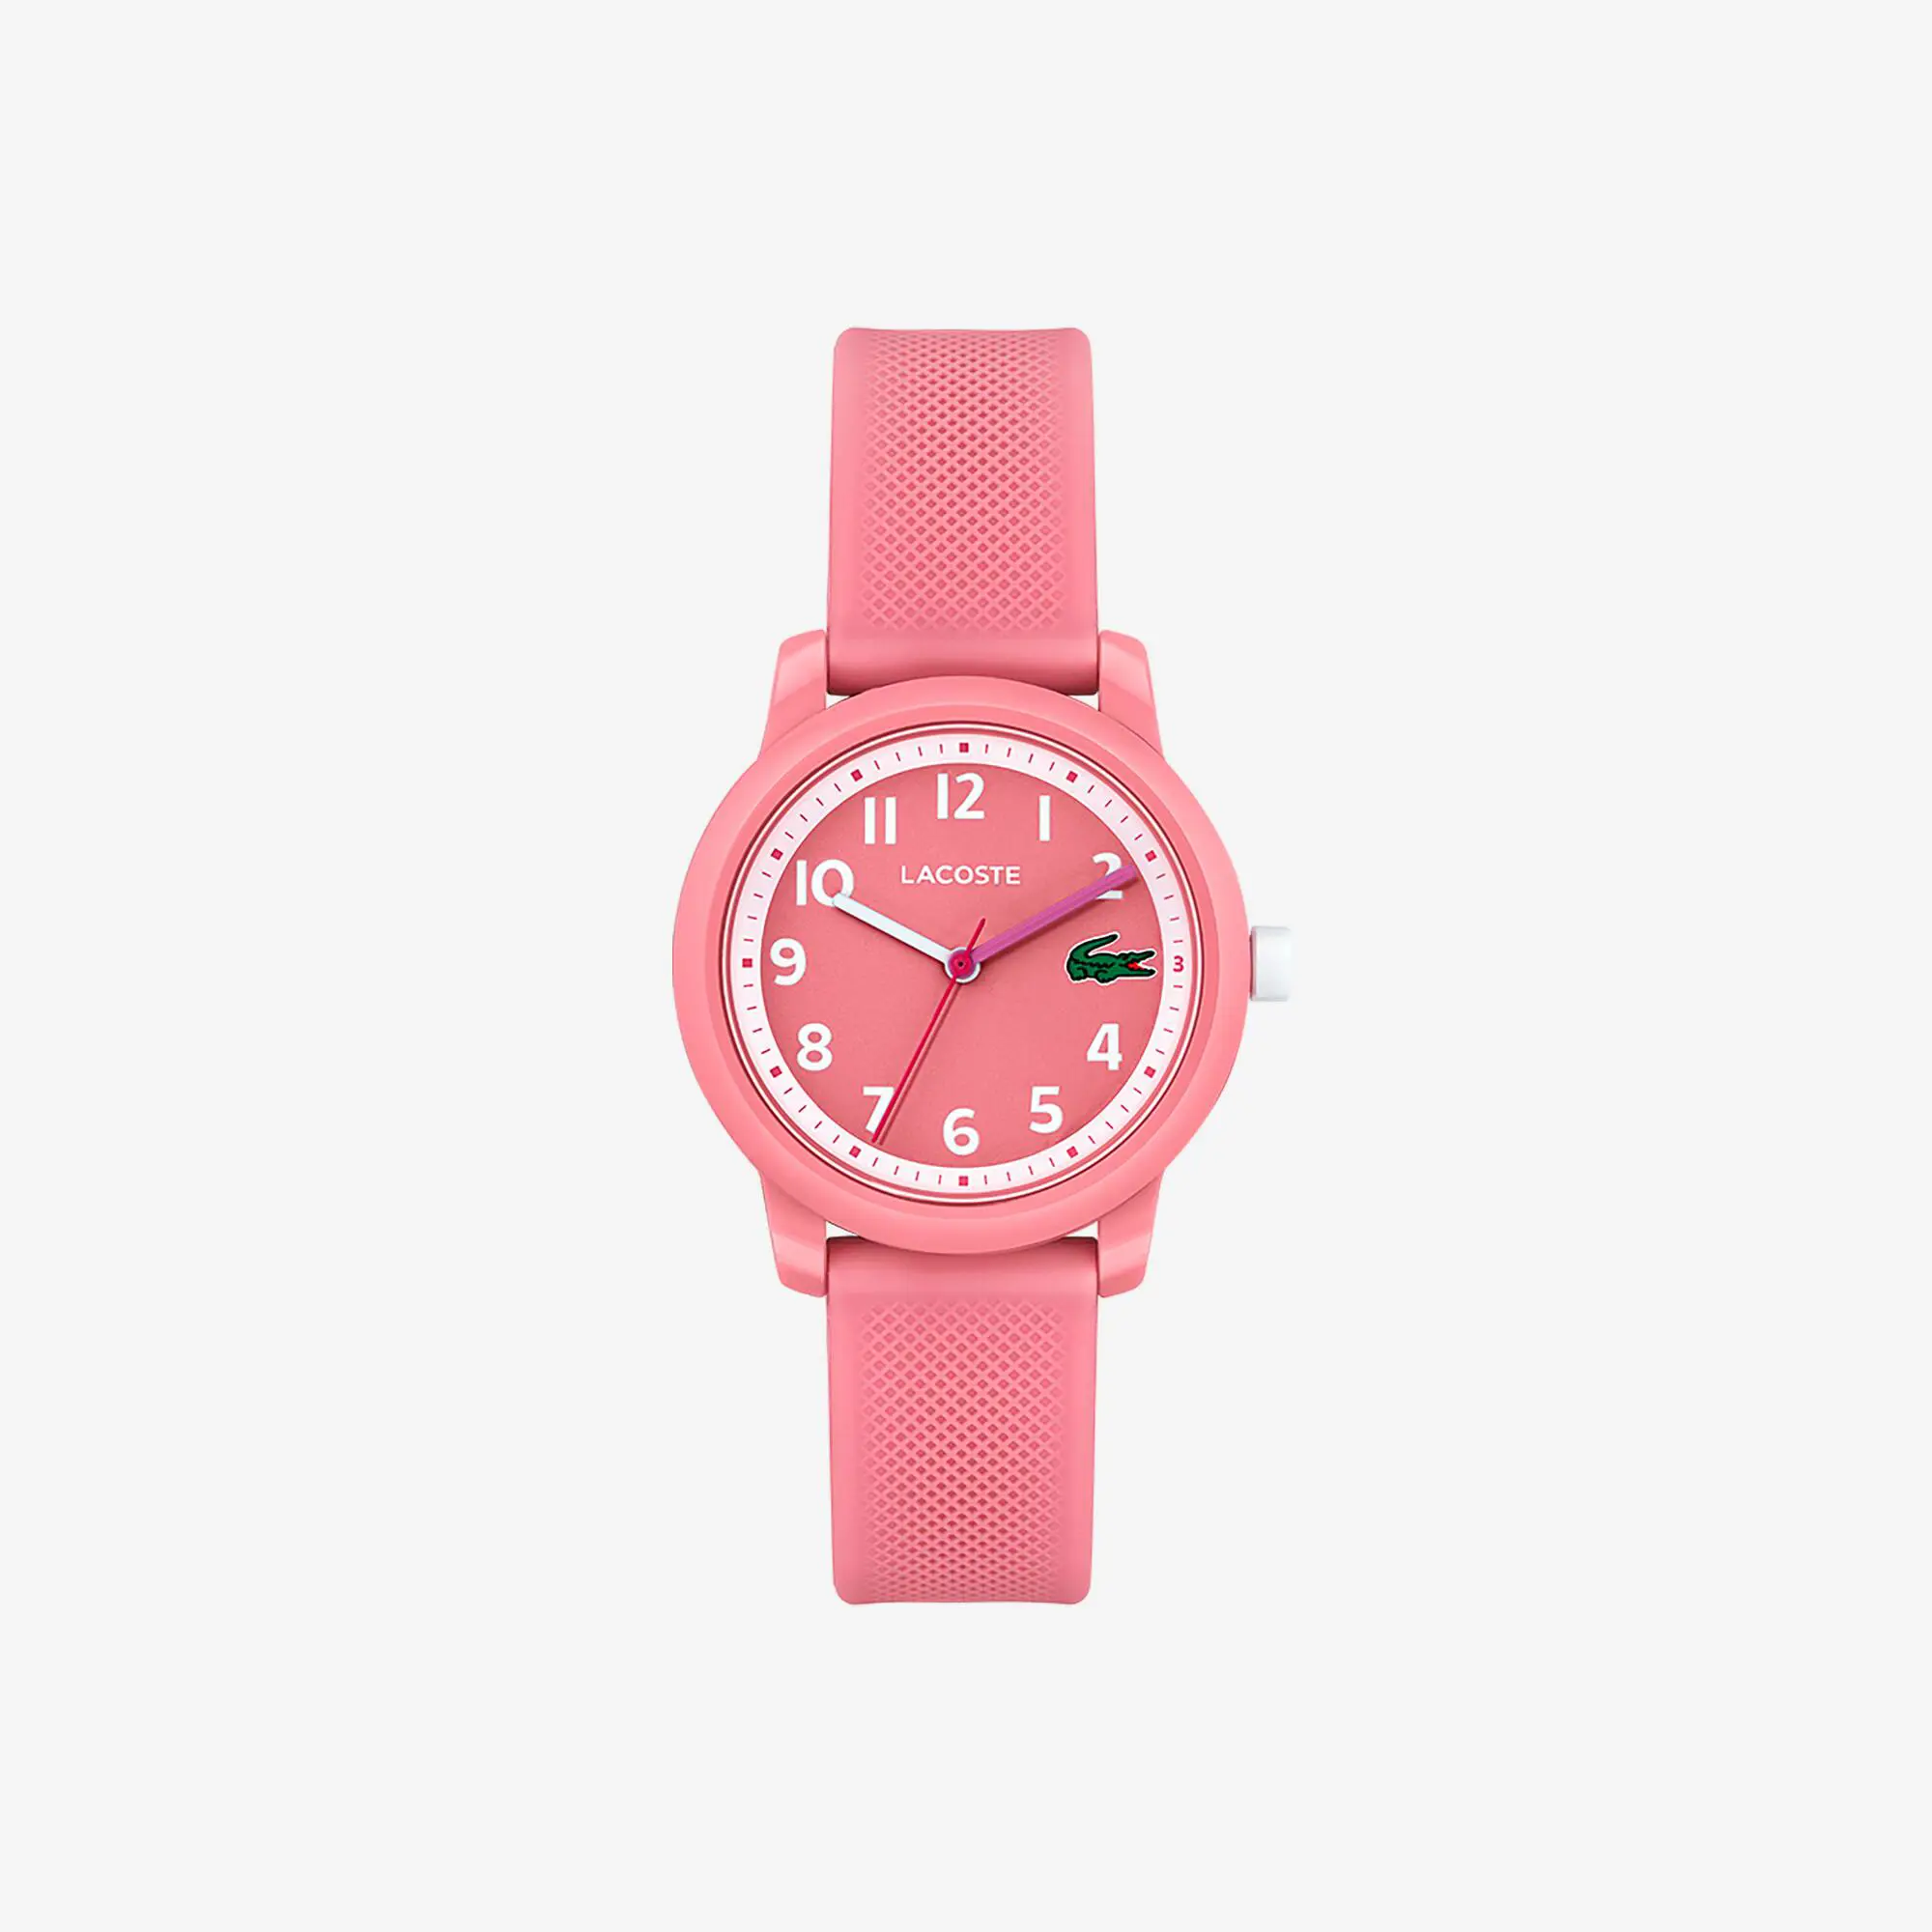 Lacoste Reloj de niño Lacoste.12.12 con correa de silicona rosa. 2